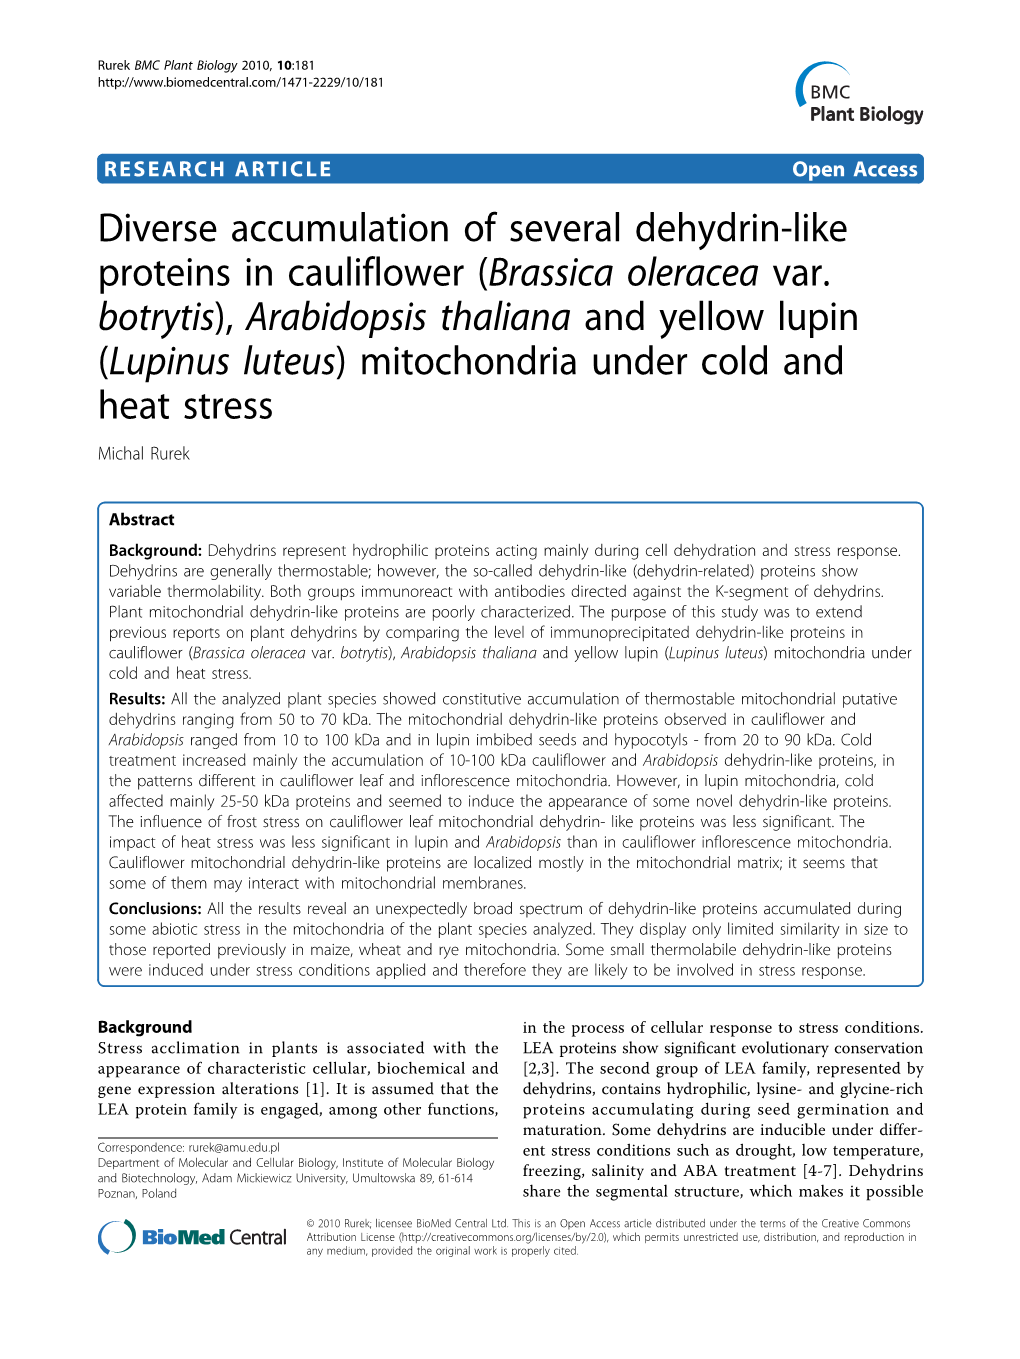 Diverse Accumulation of Several Dehydrin-Like Proteins in Cauliflower (Brassica Oleracea Var